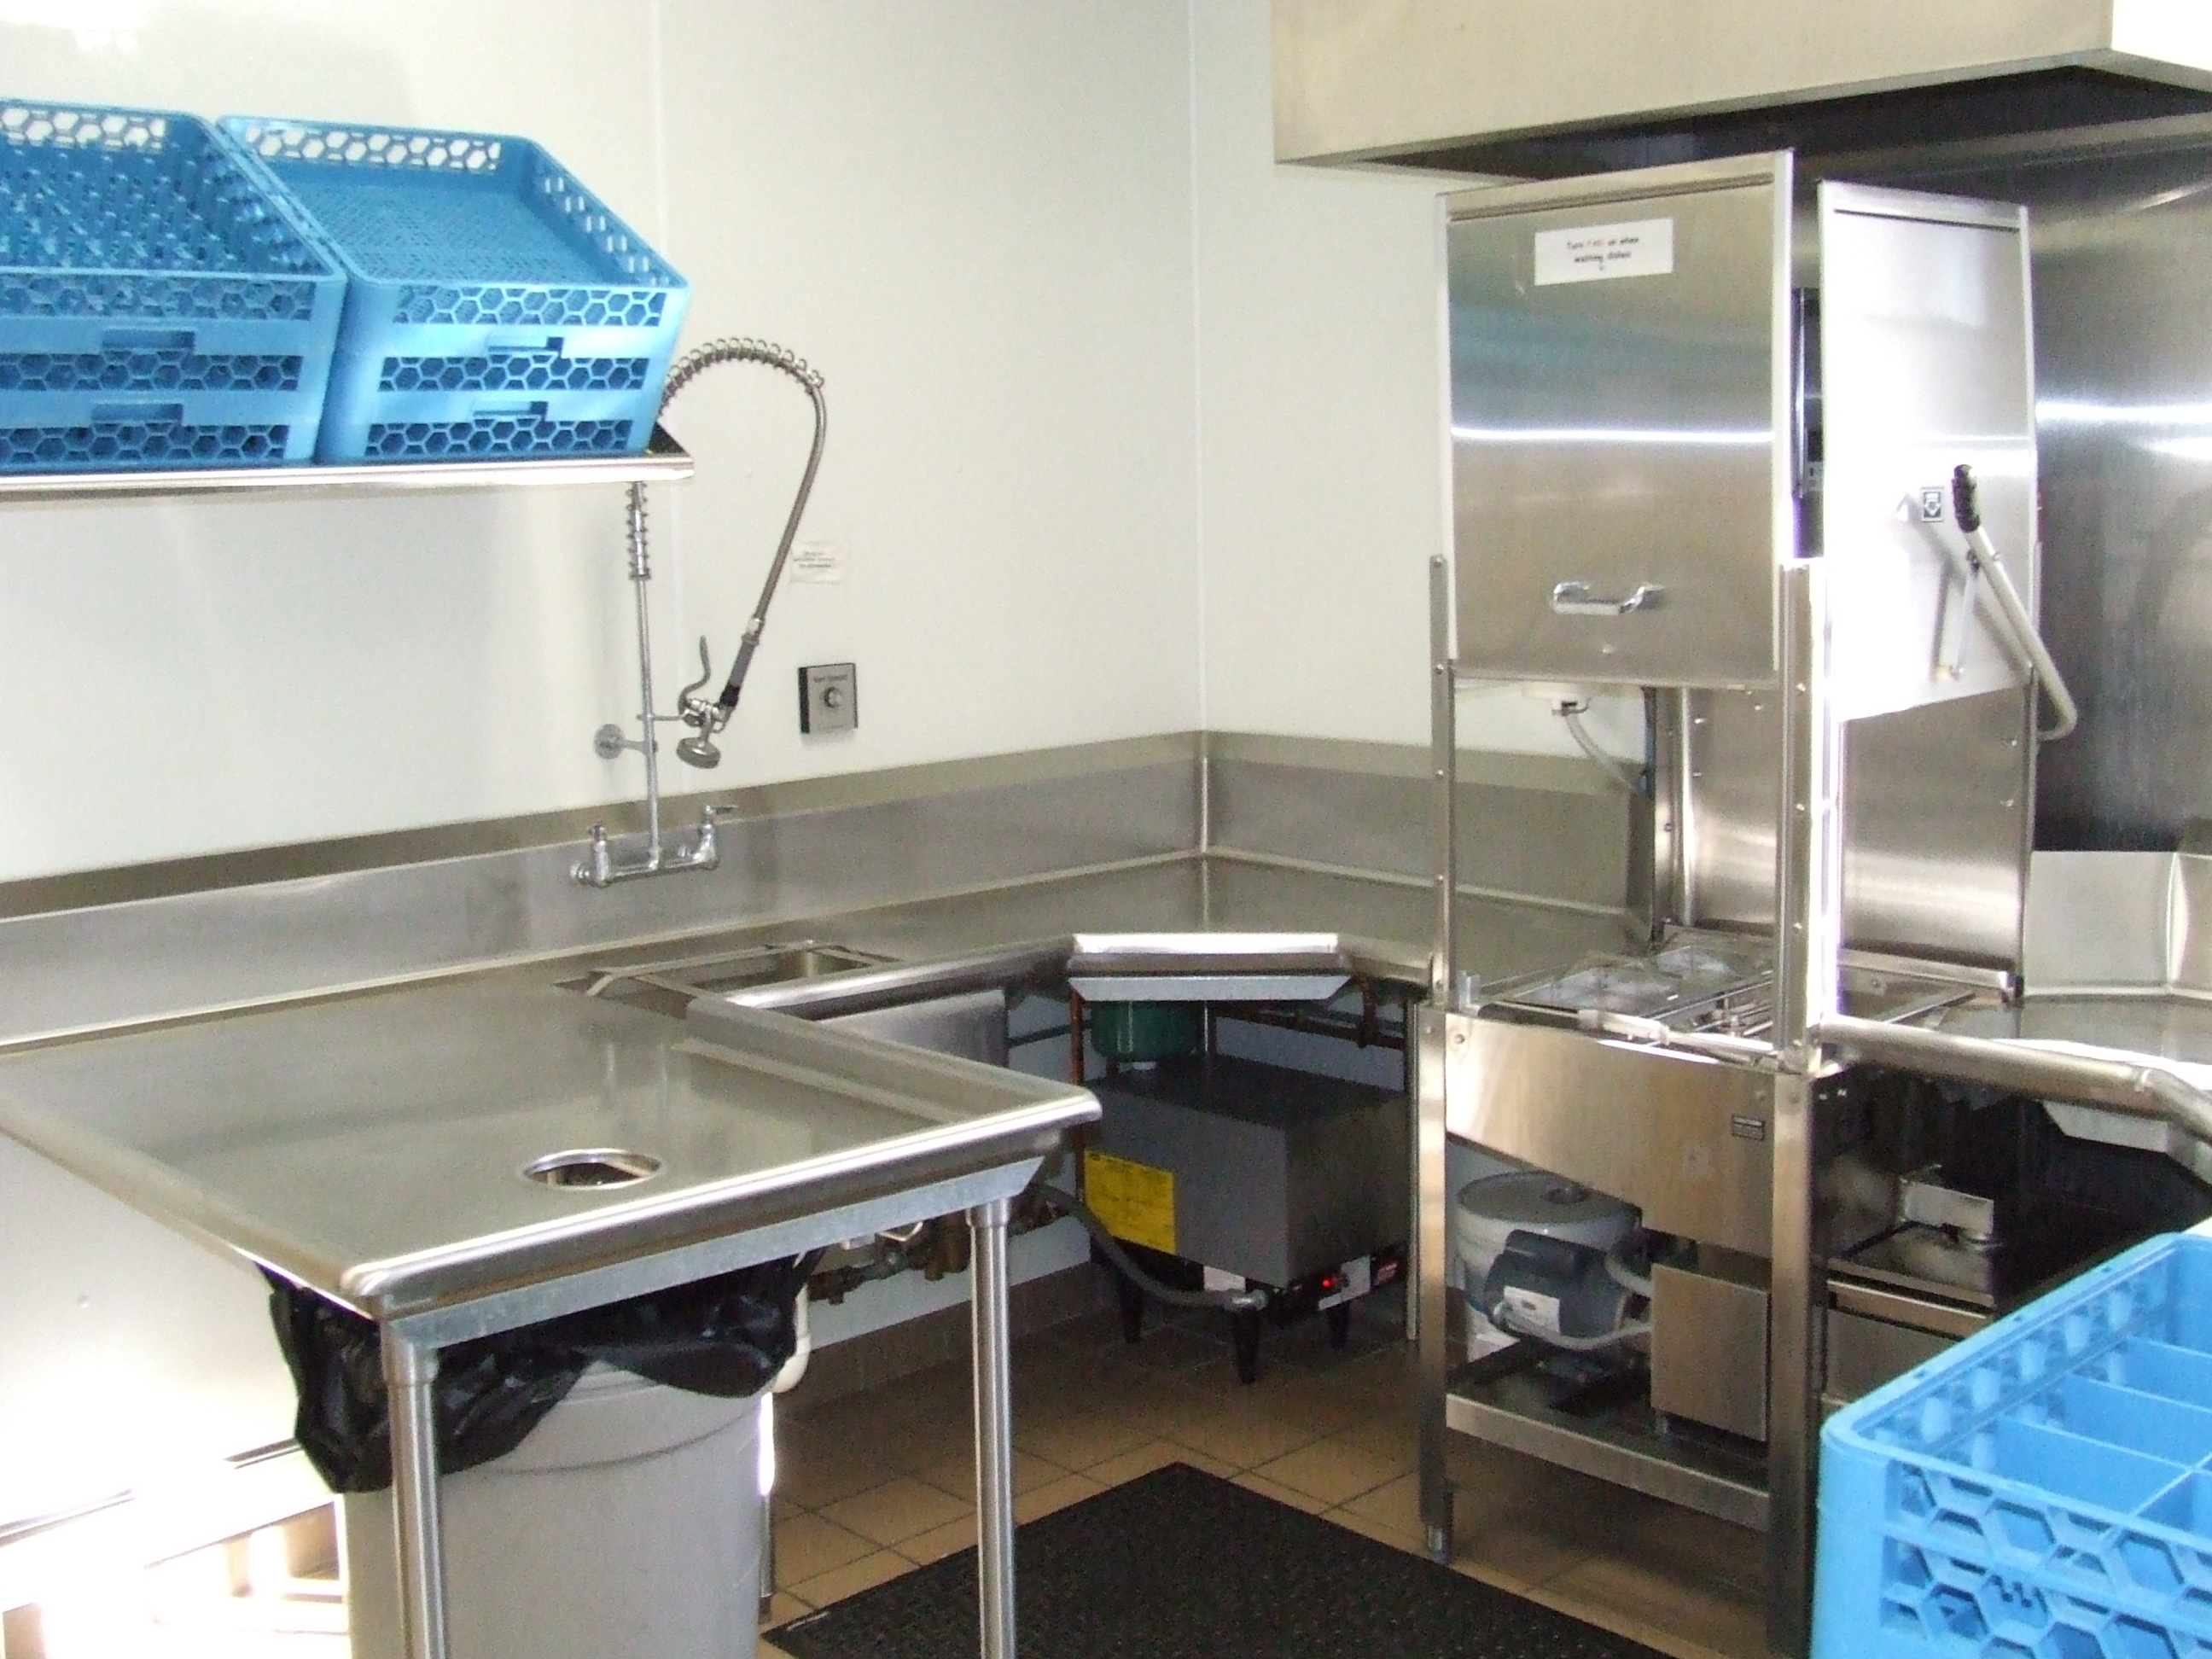 Kitchen - commercial dishwasher area